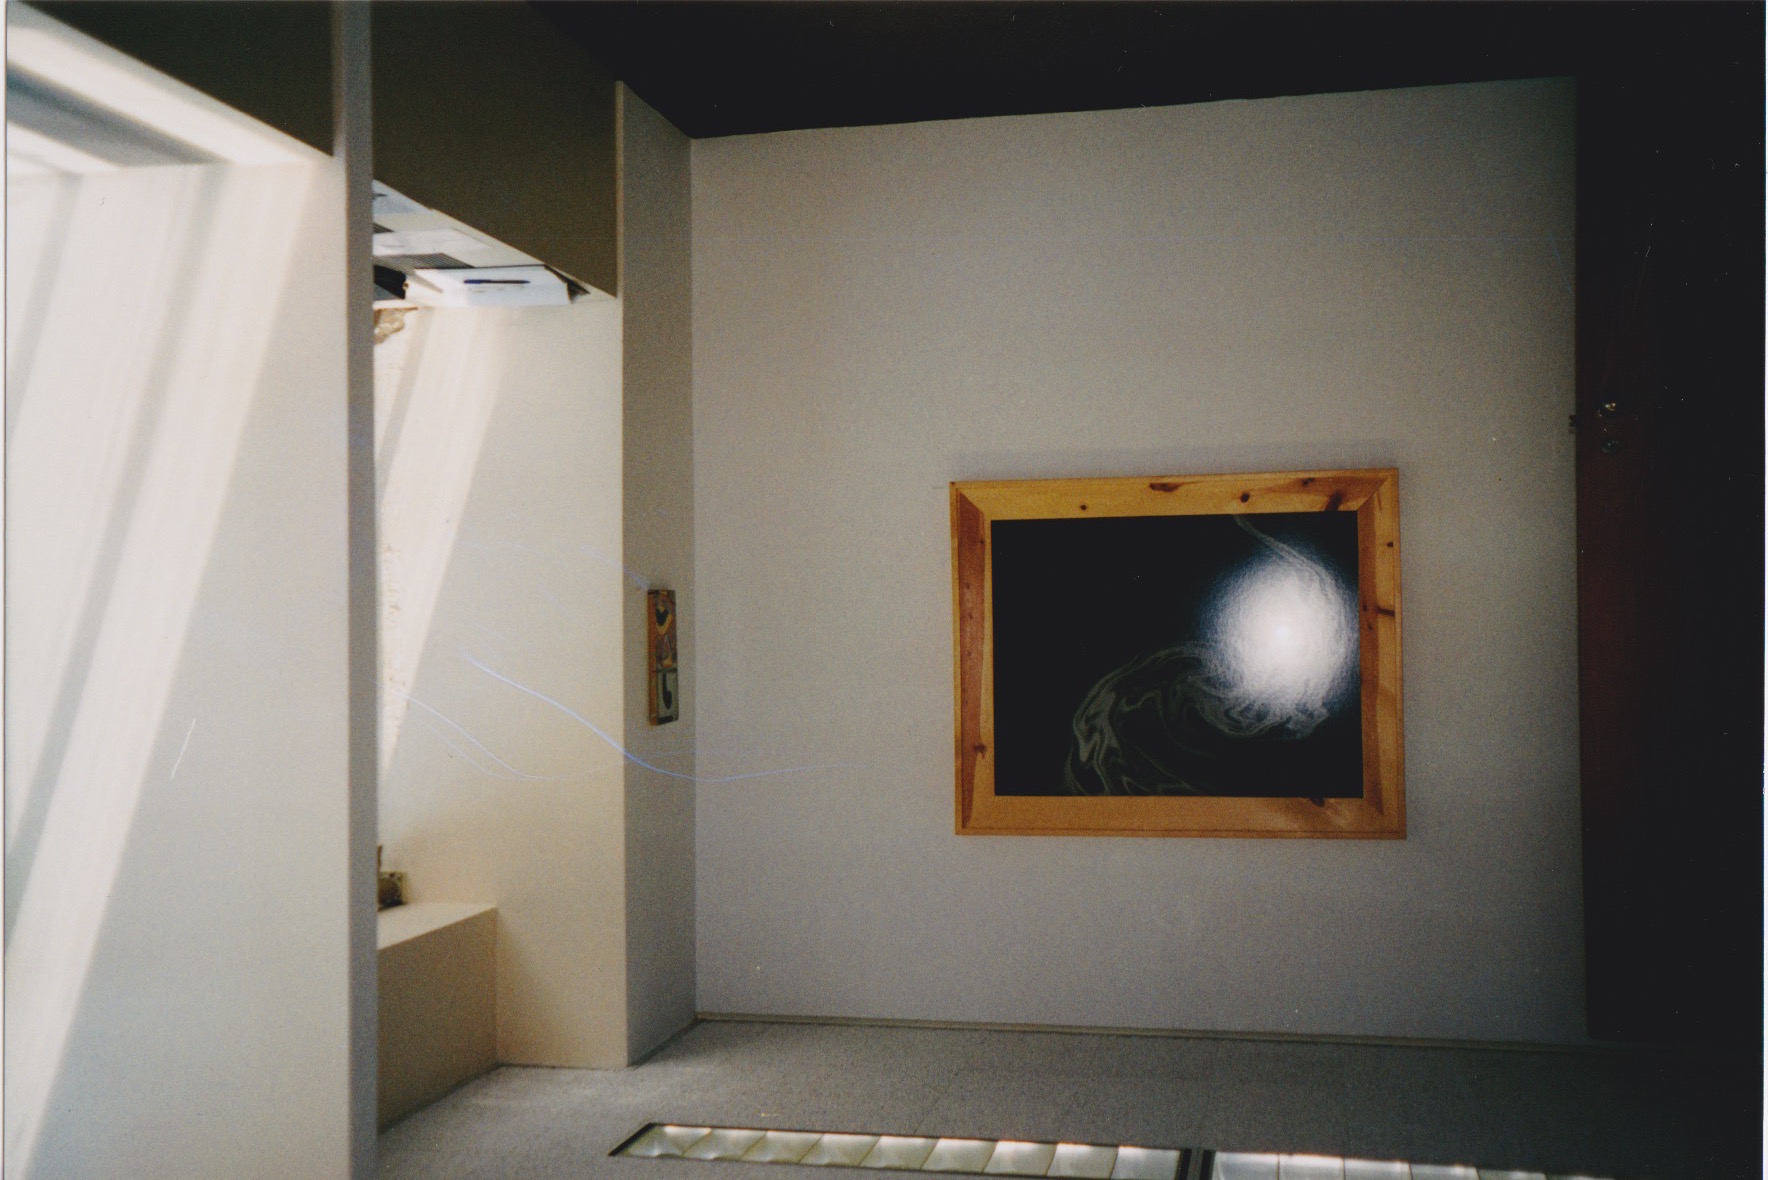  The Art Exchange Show 1996 